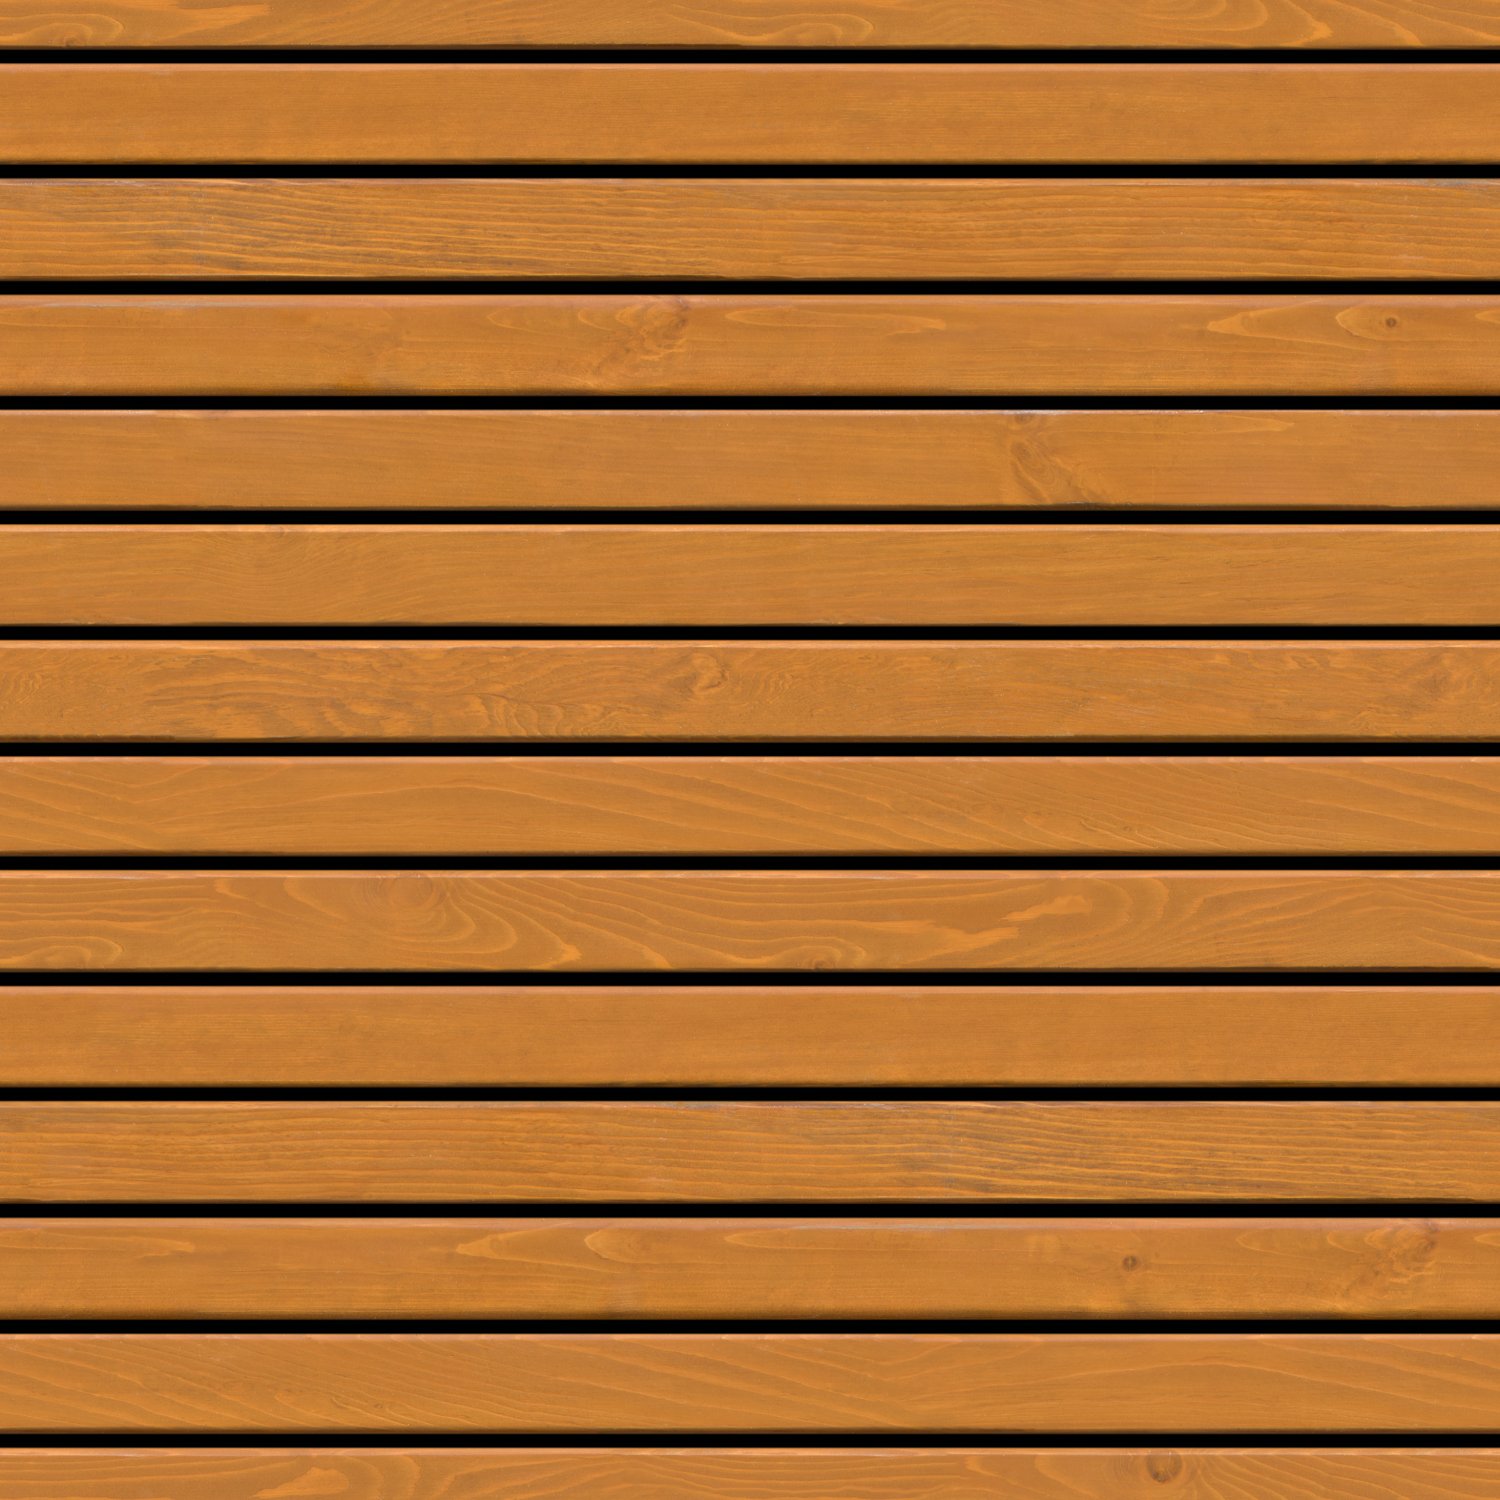 wood plank texture seamless